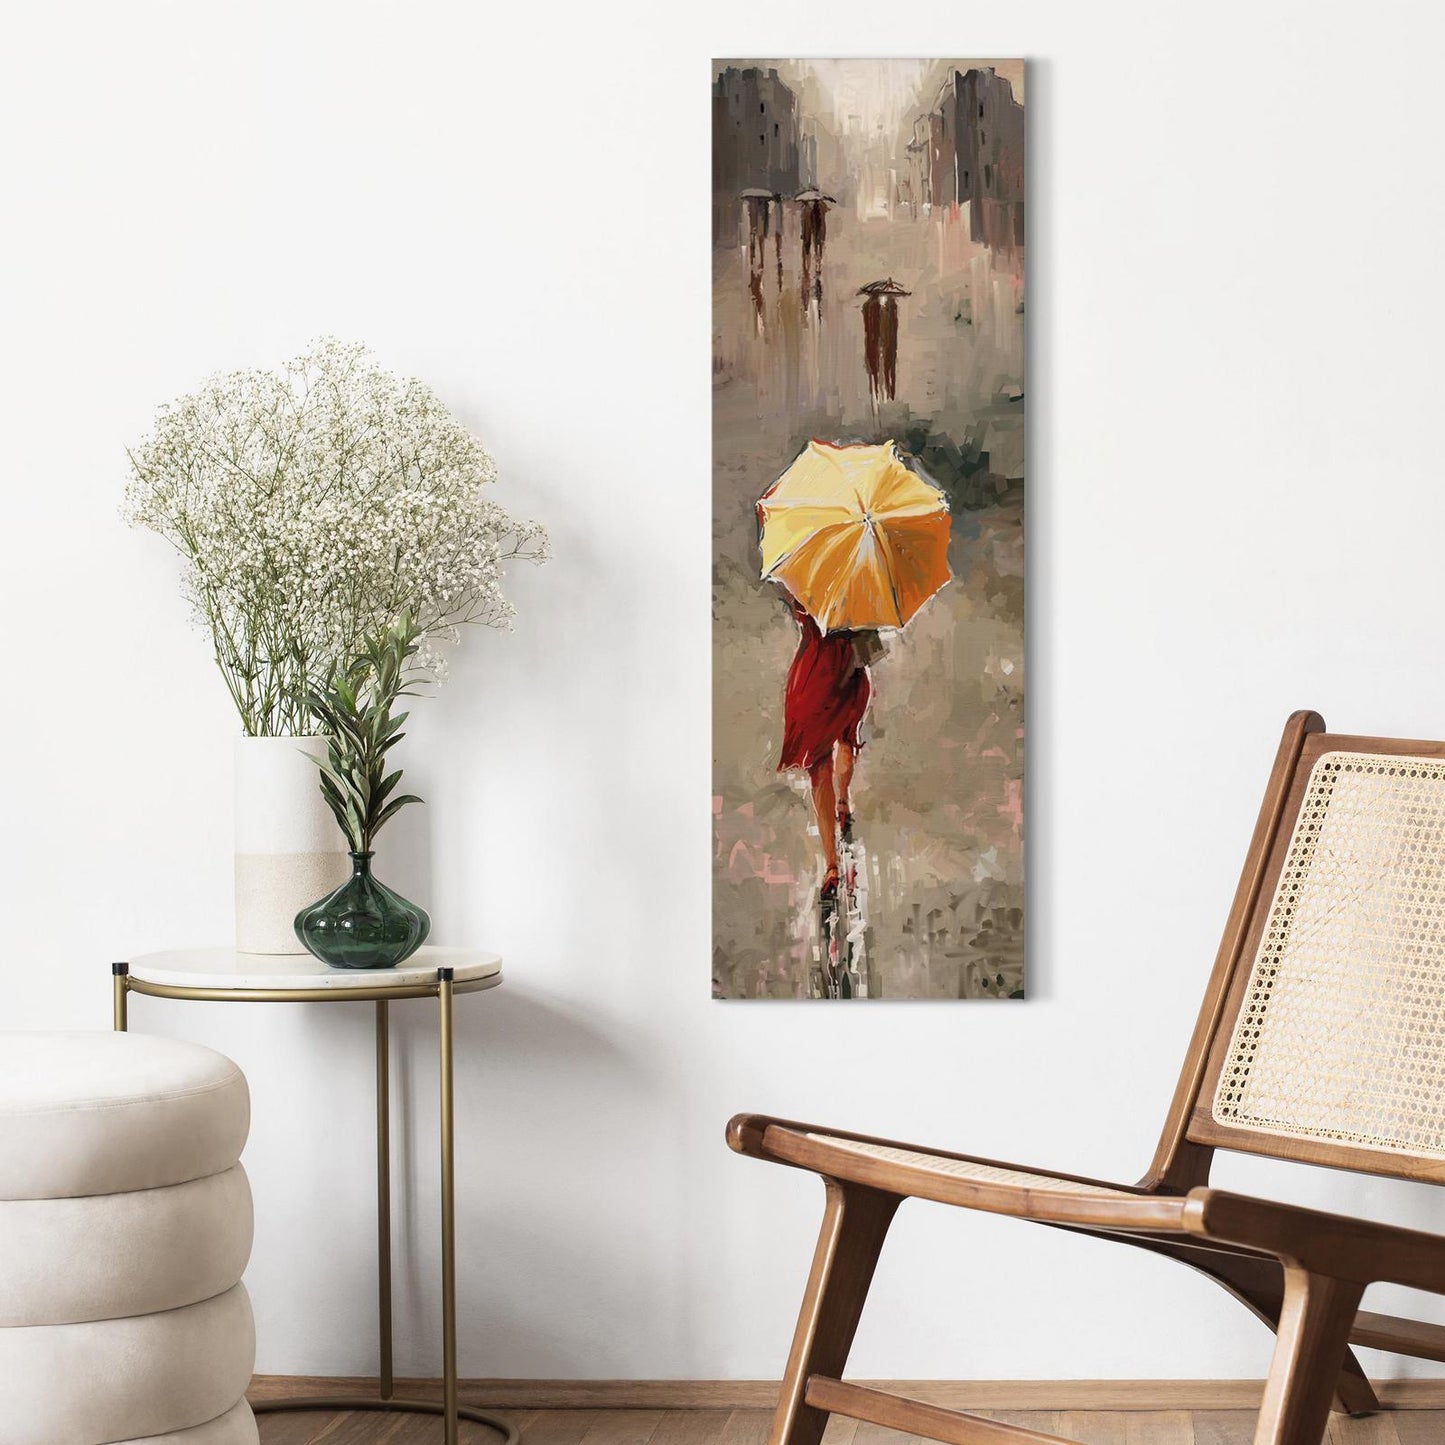 Schilderij - Beauty in the rain